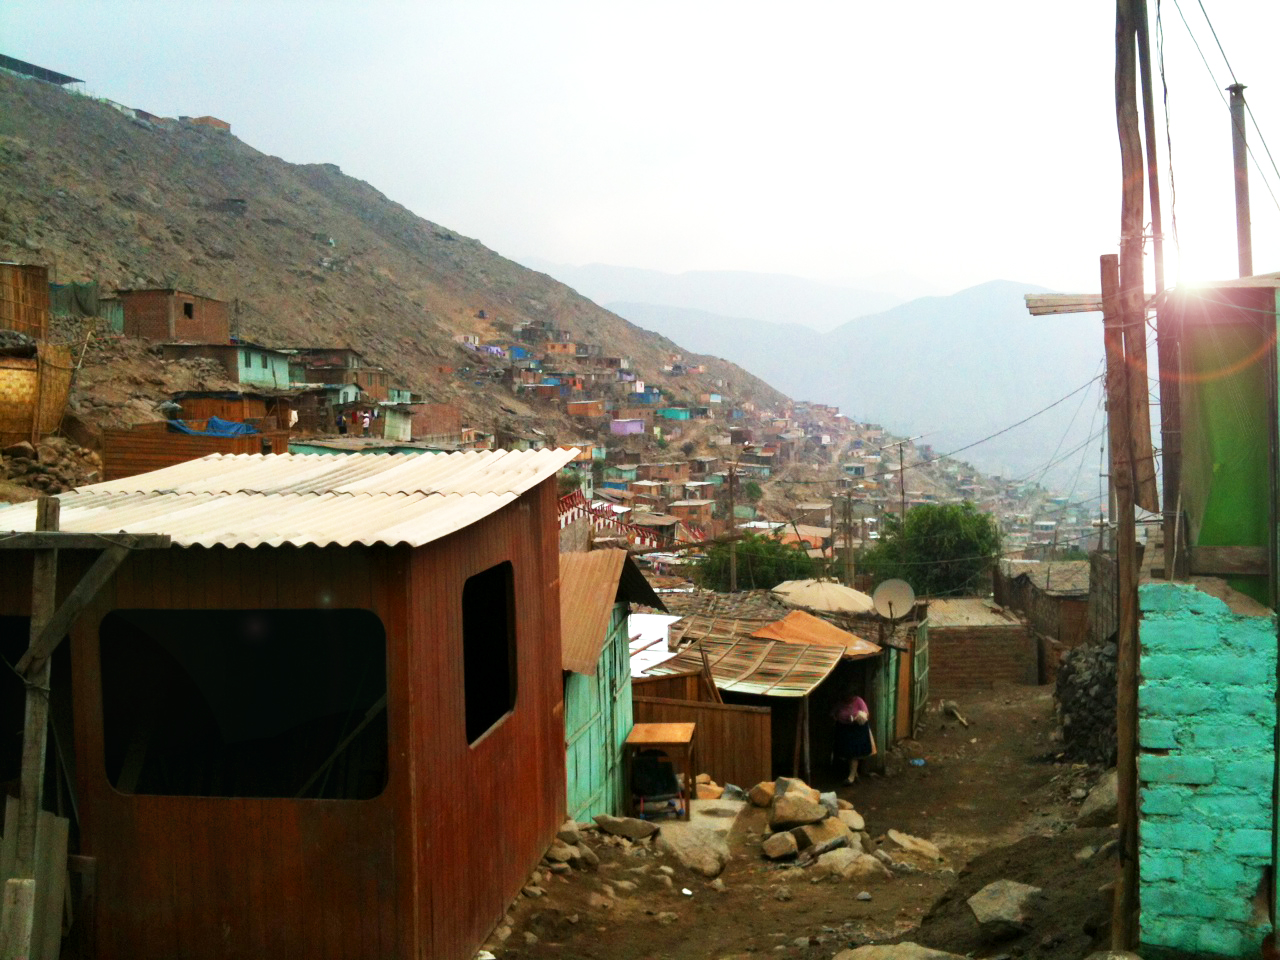 Hillside town in Latin America